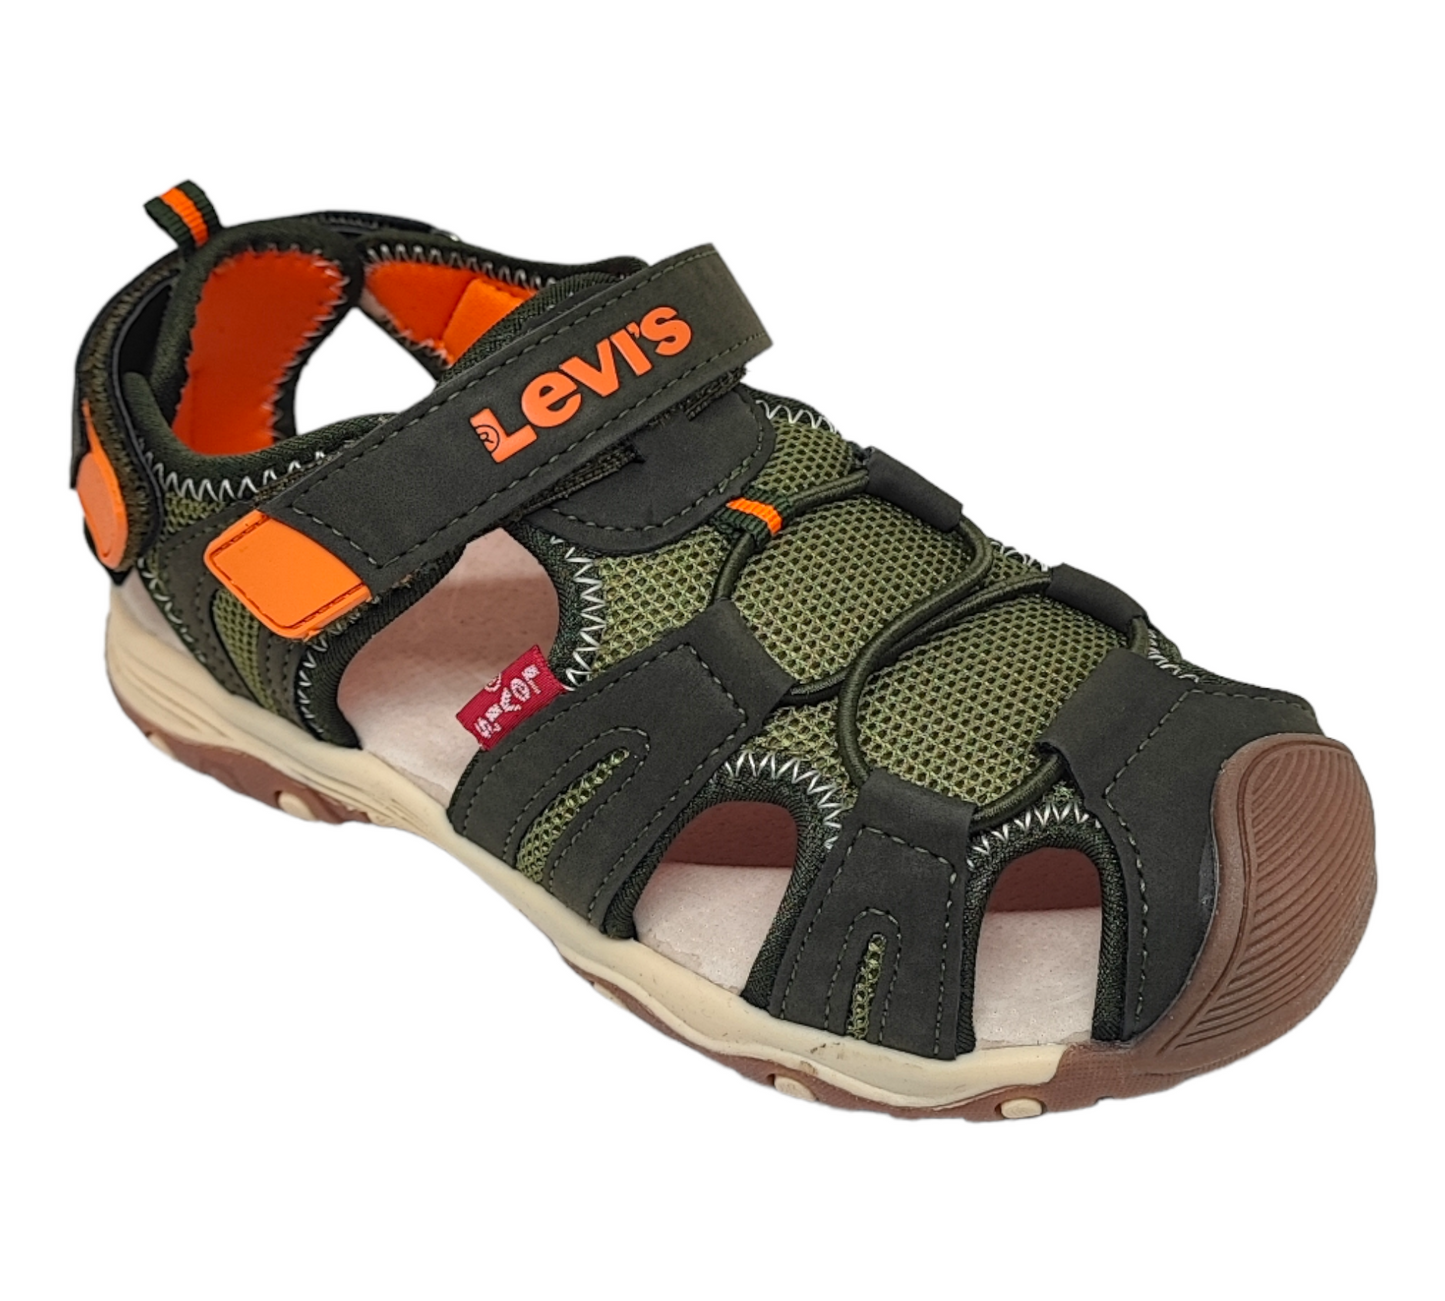 LEVIS Kinder Sandale mit Zehenschutz